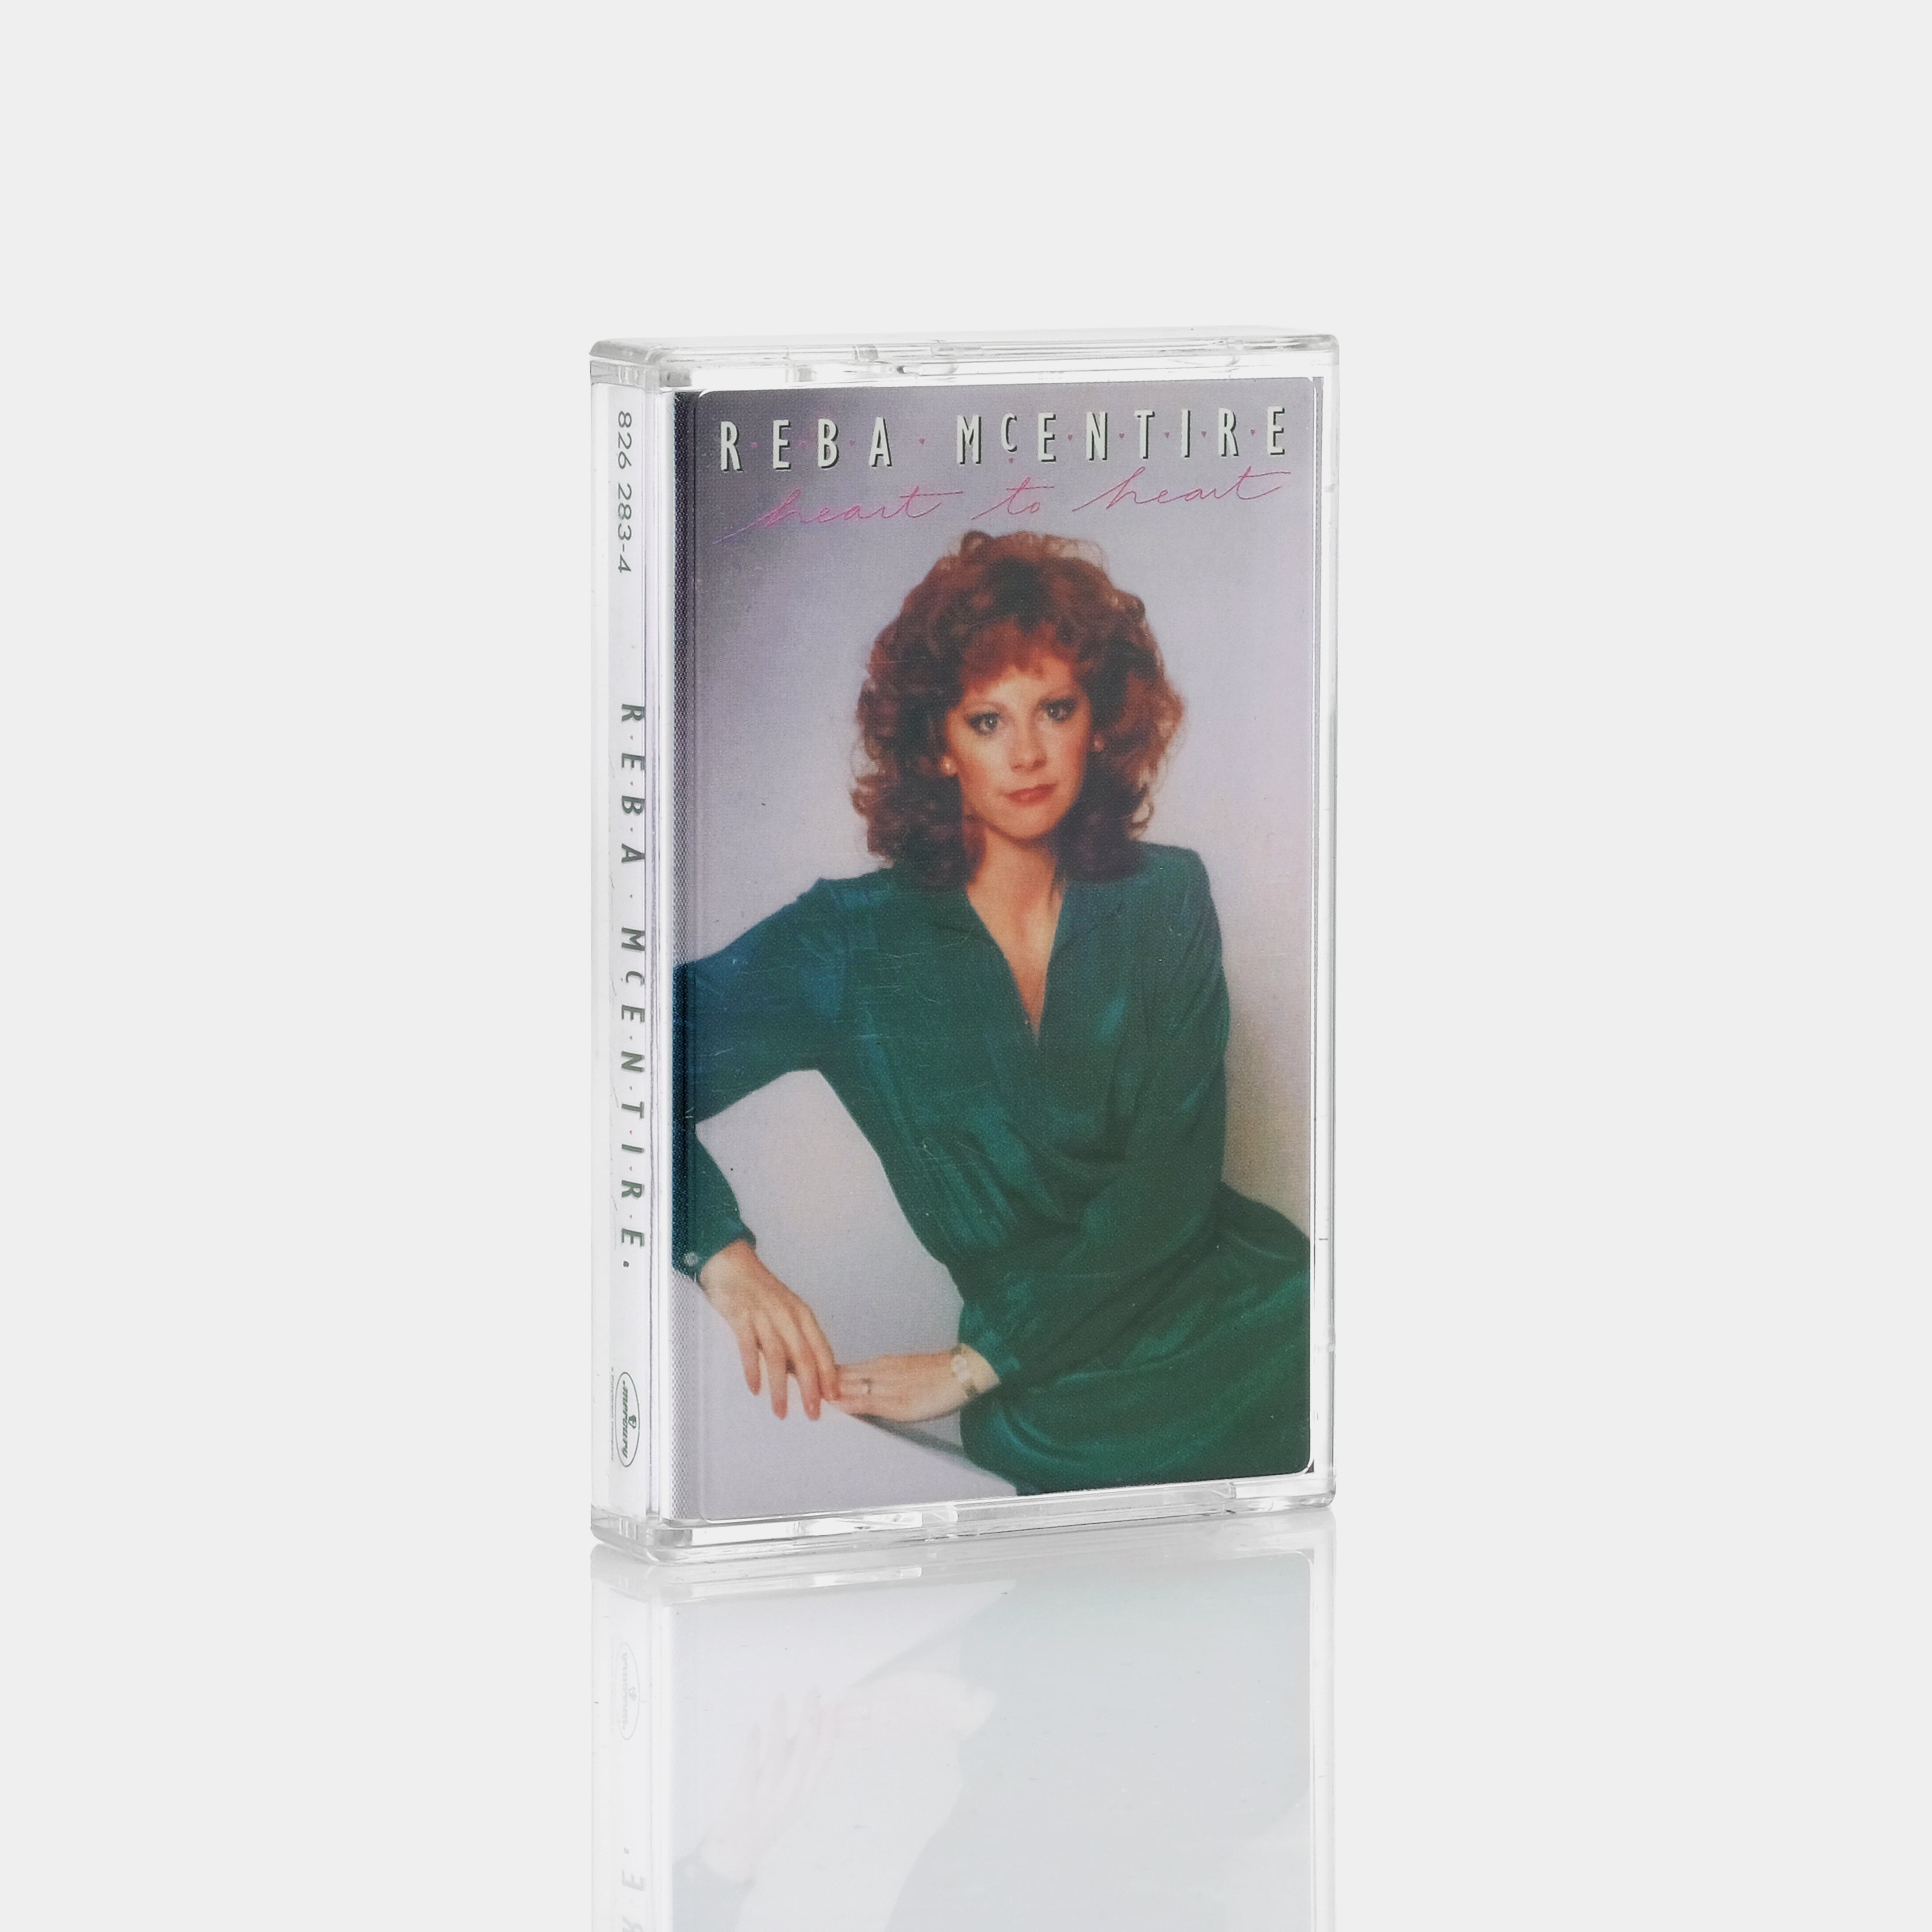 Reba McEntire - Heart To Heart Cassette Tape